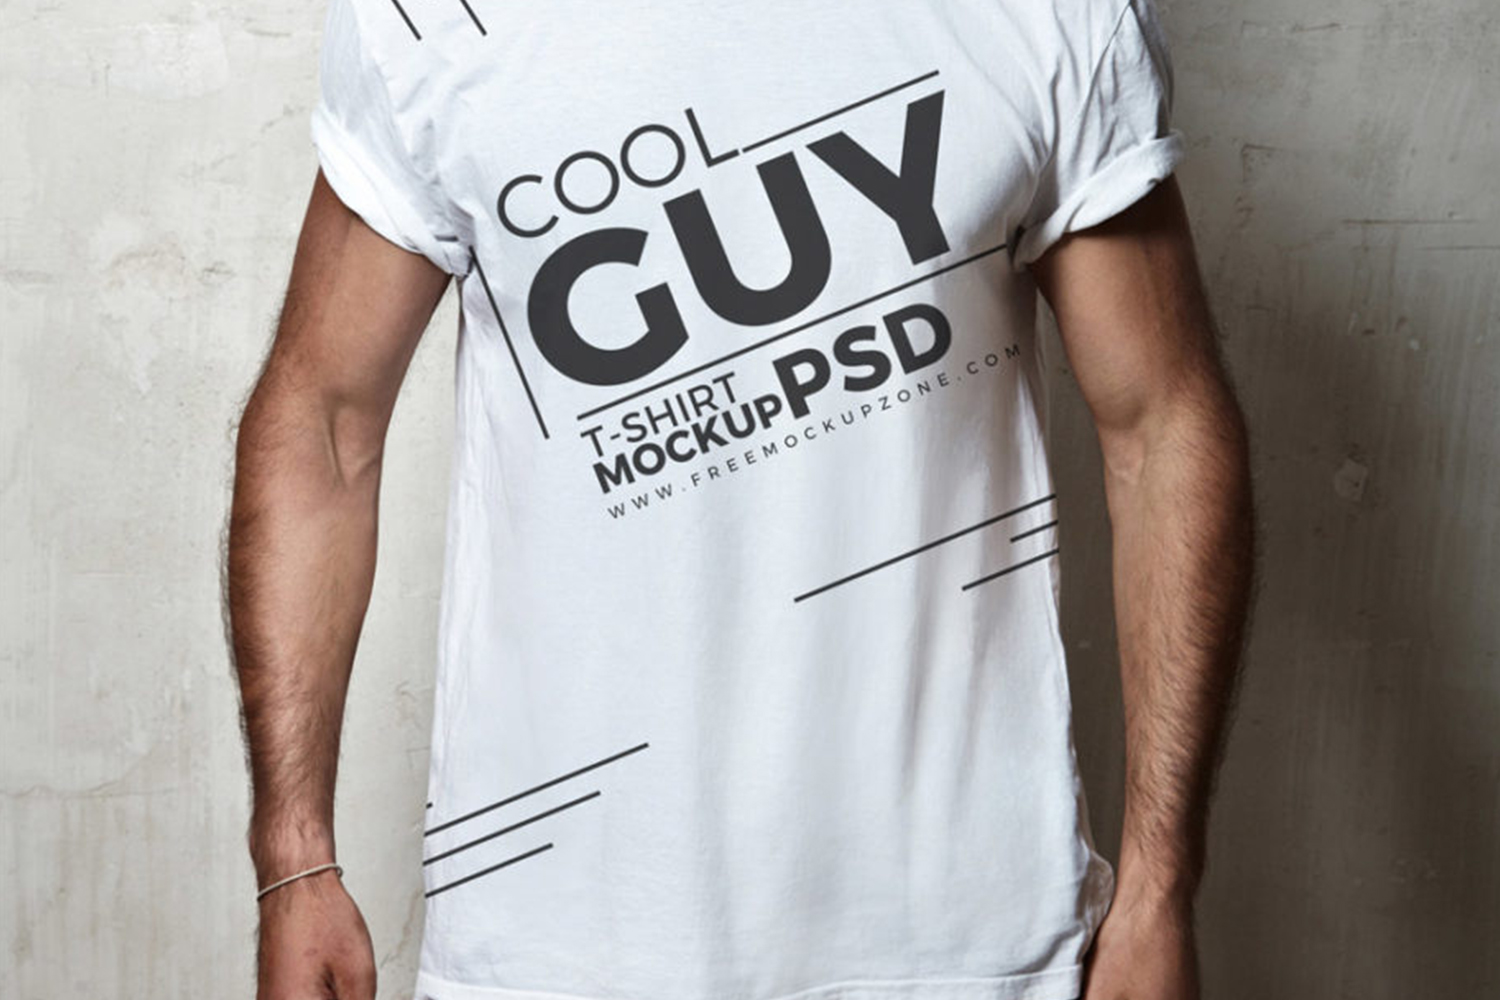 Guy T-Shirt Mockup Free Download